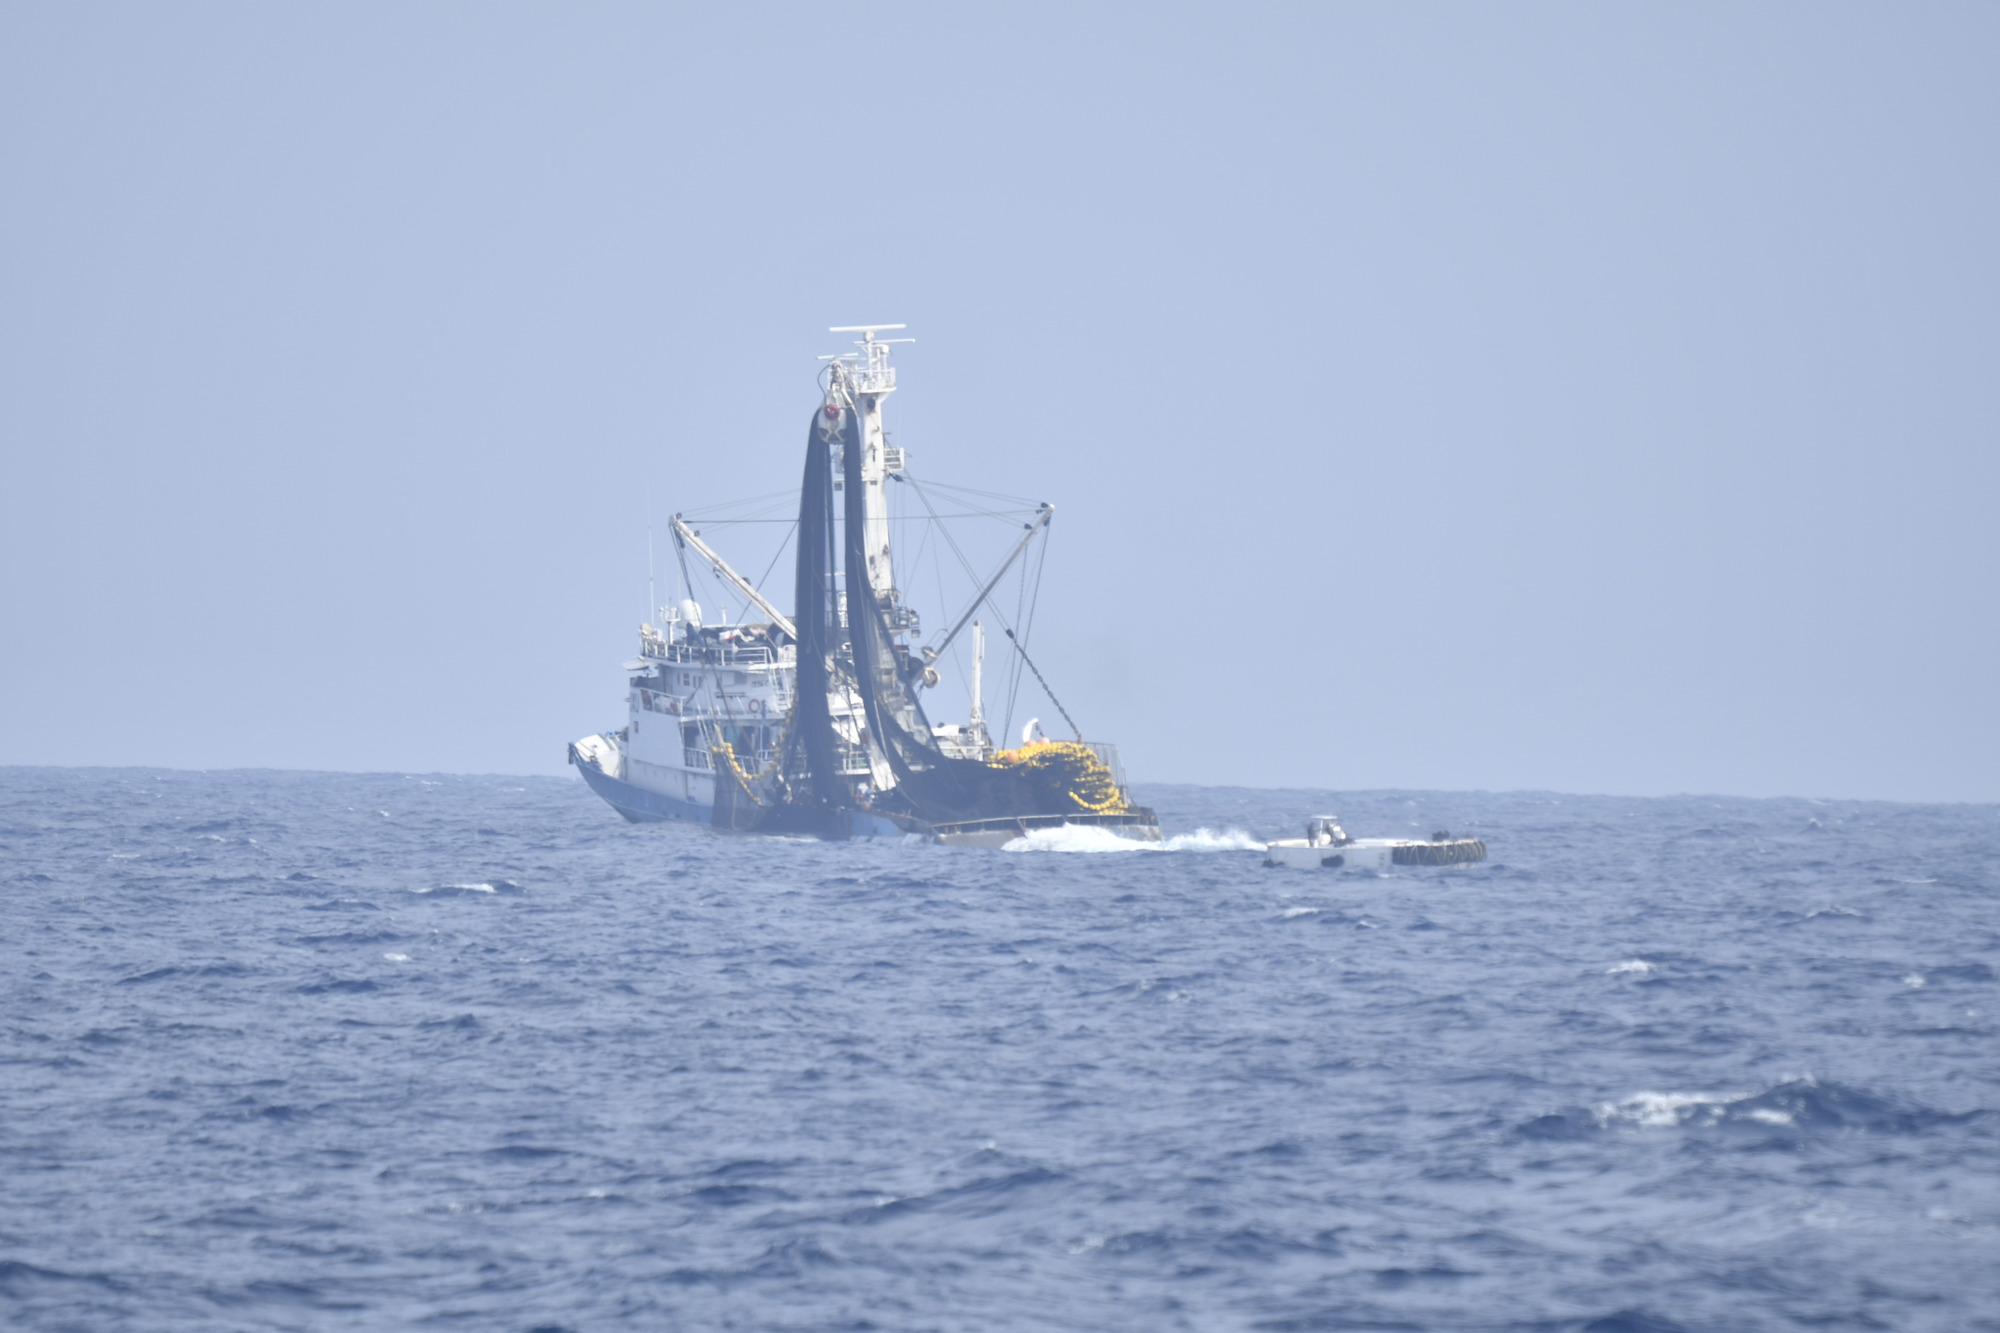 CORYMBE 158 - Le PHM Ducuing apporte son aide à un navire de pêche espagnol